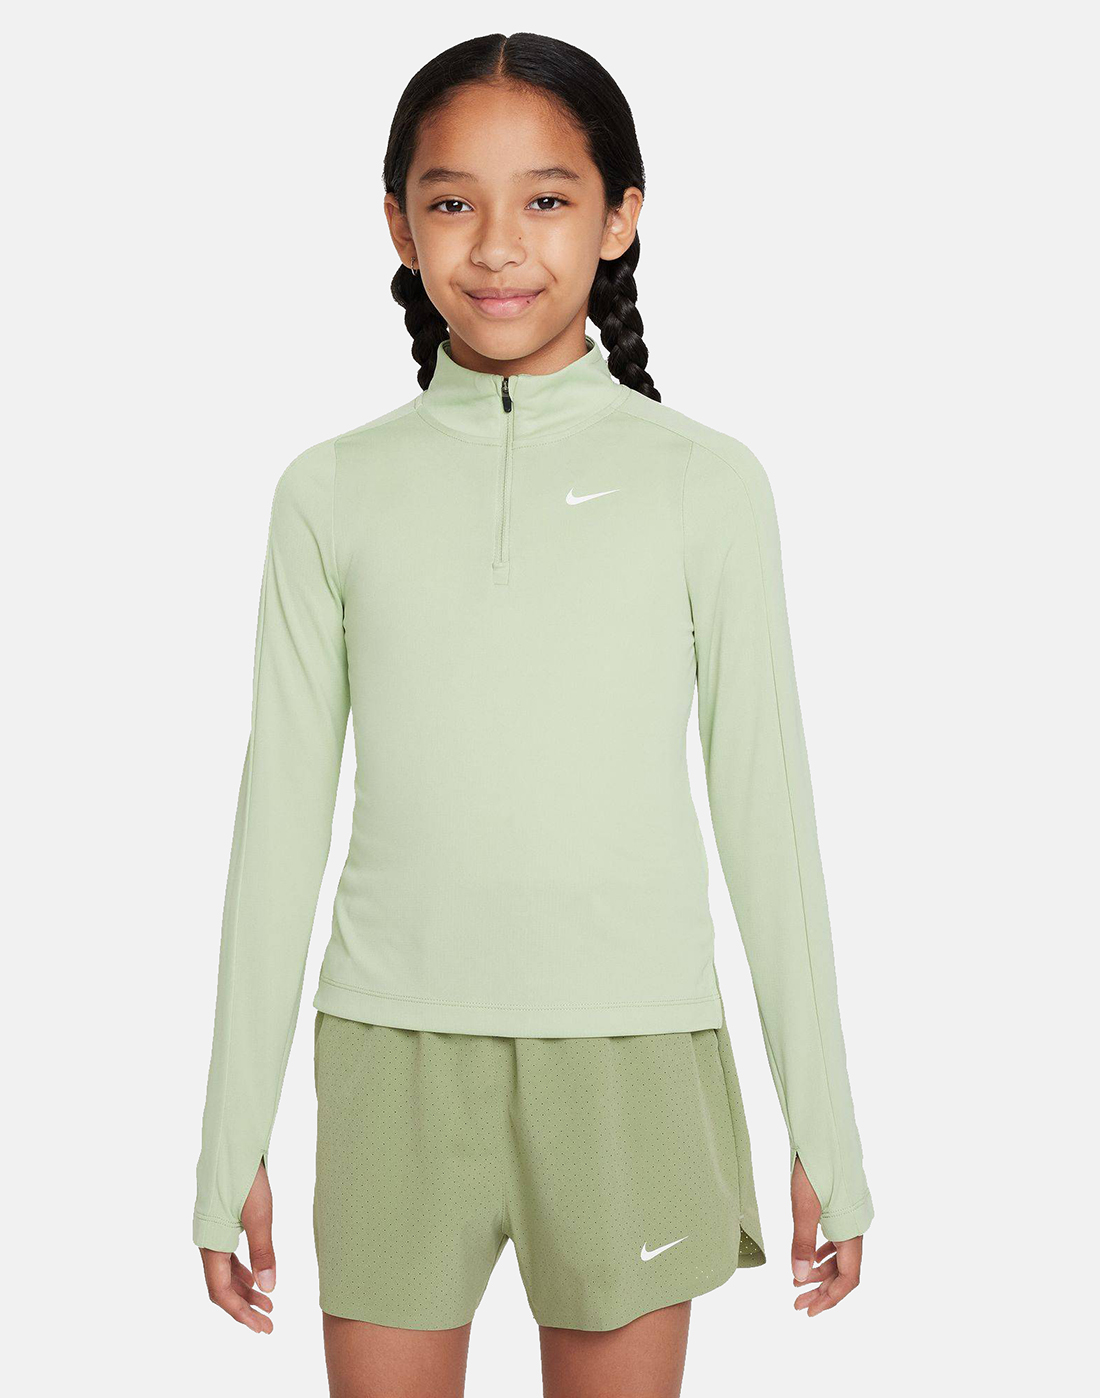 Nike Older Girls Dry-Fit Half Zip Top - Cream | Life Style Sports IE